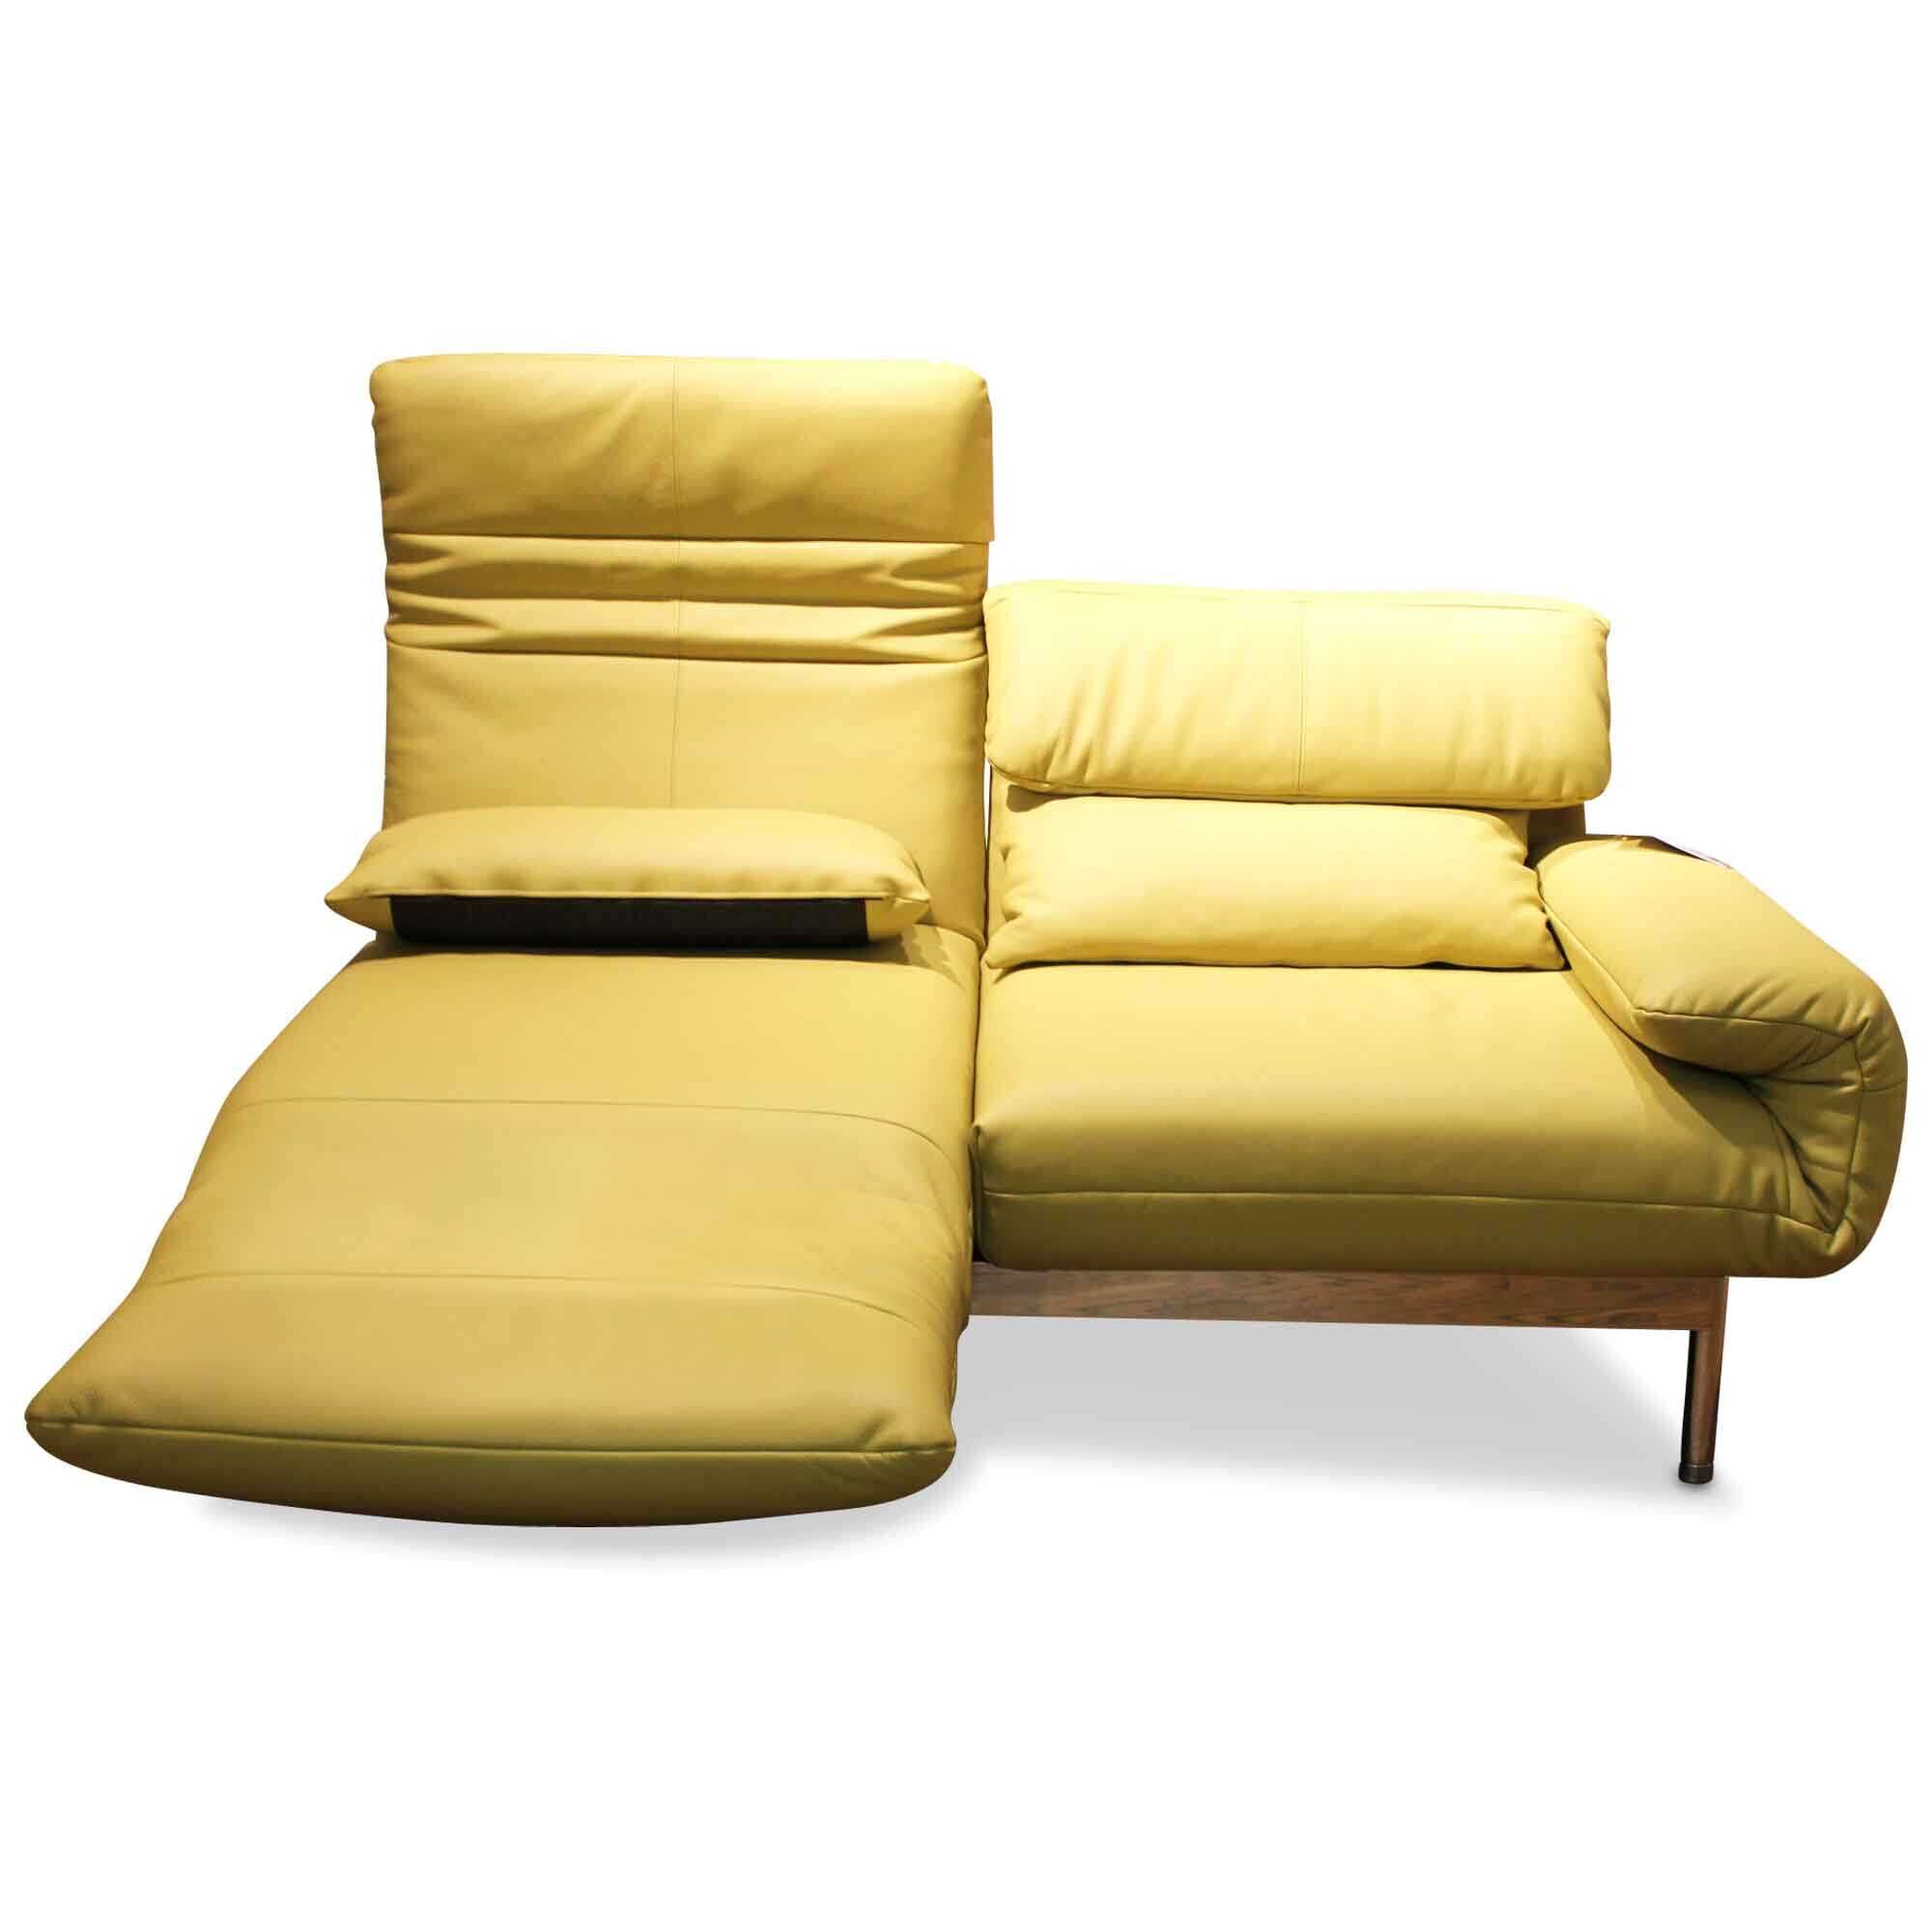 Sofa 380 Plura in Leder grün gelb